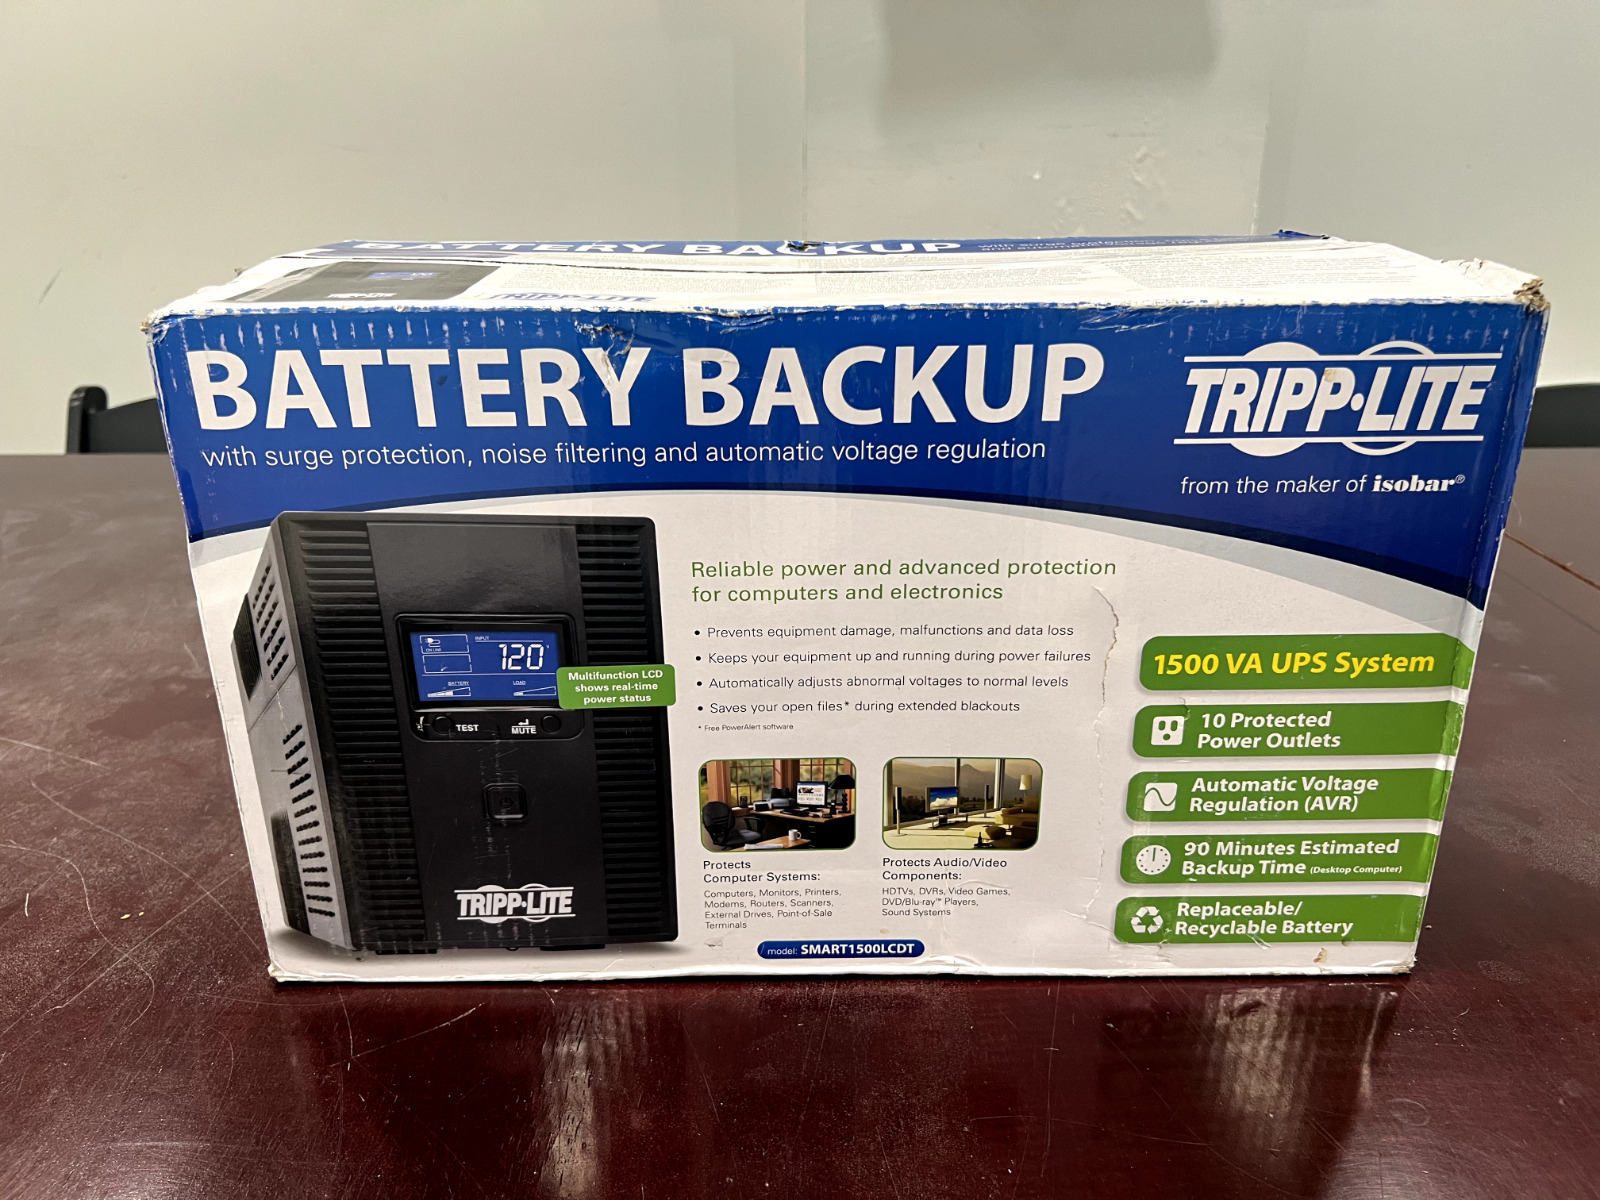 Tripp Lite Battery Backup Model No. SMART1500LCDT